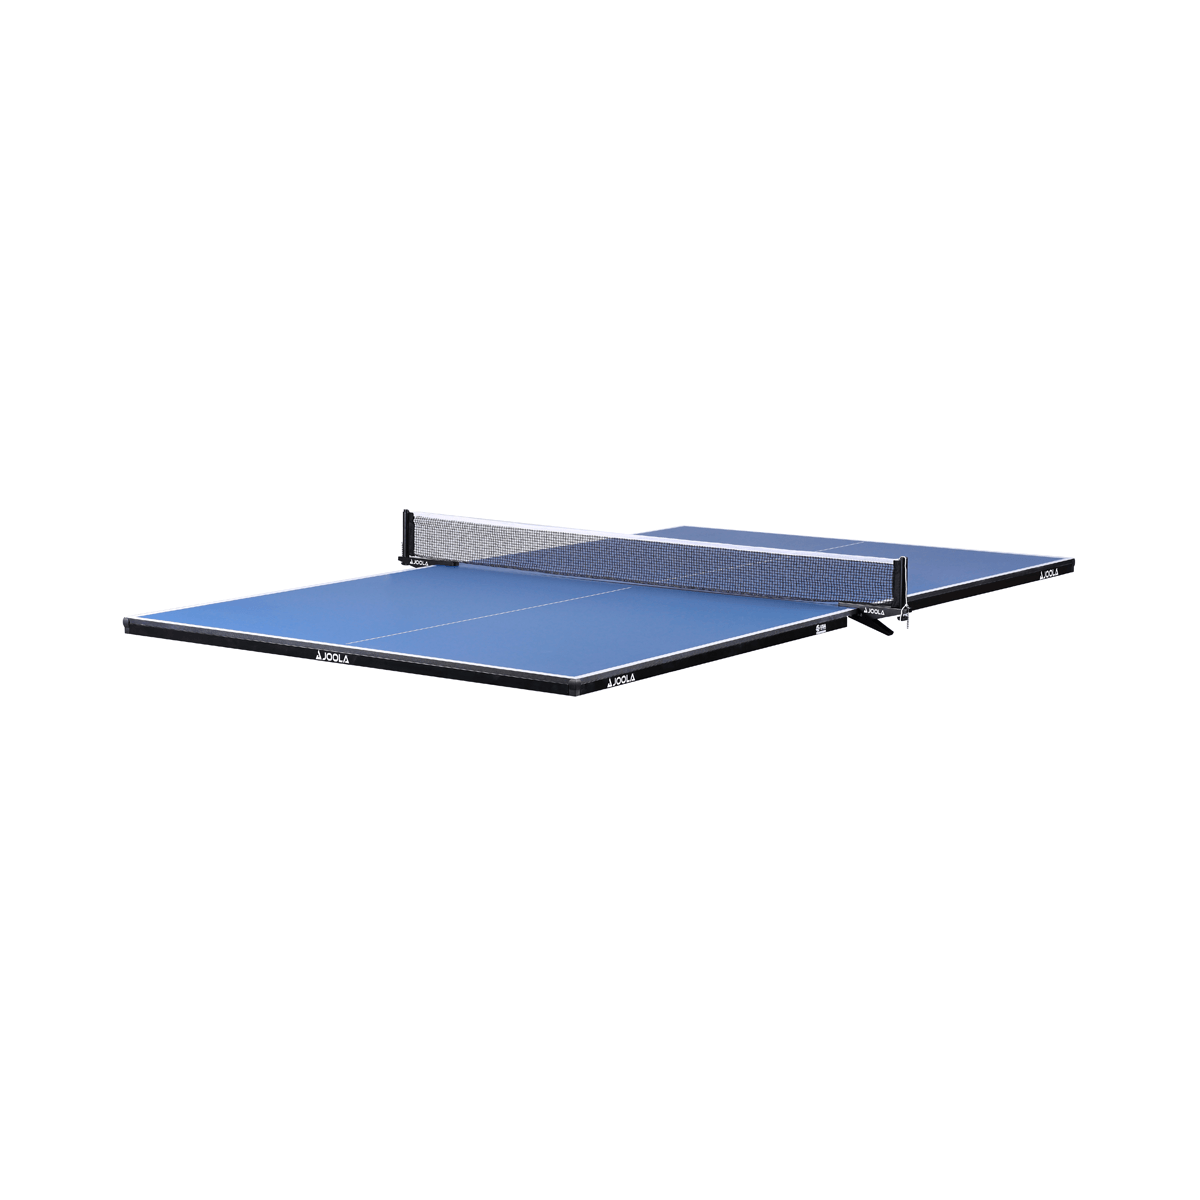 JOOLA Conversion Table Tennis Top with Metal Apron